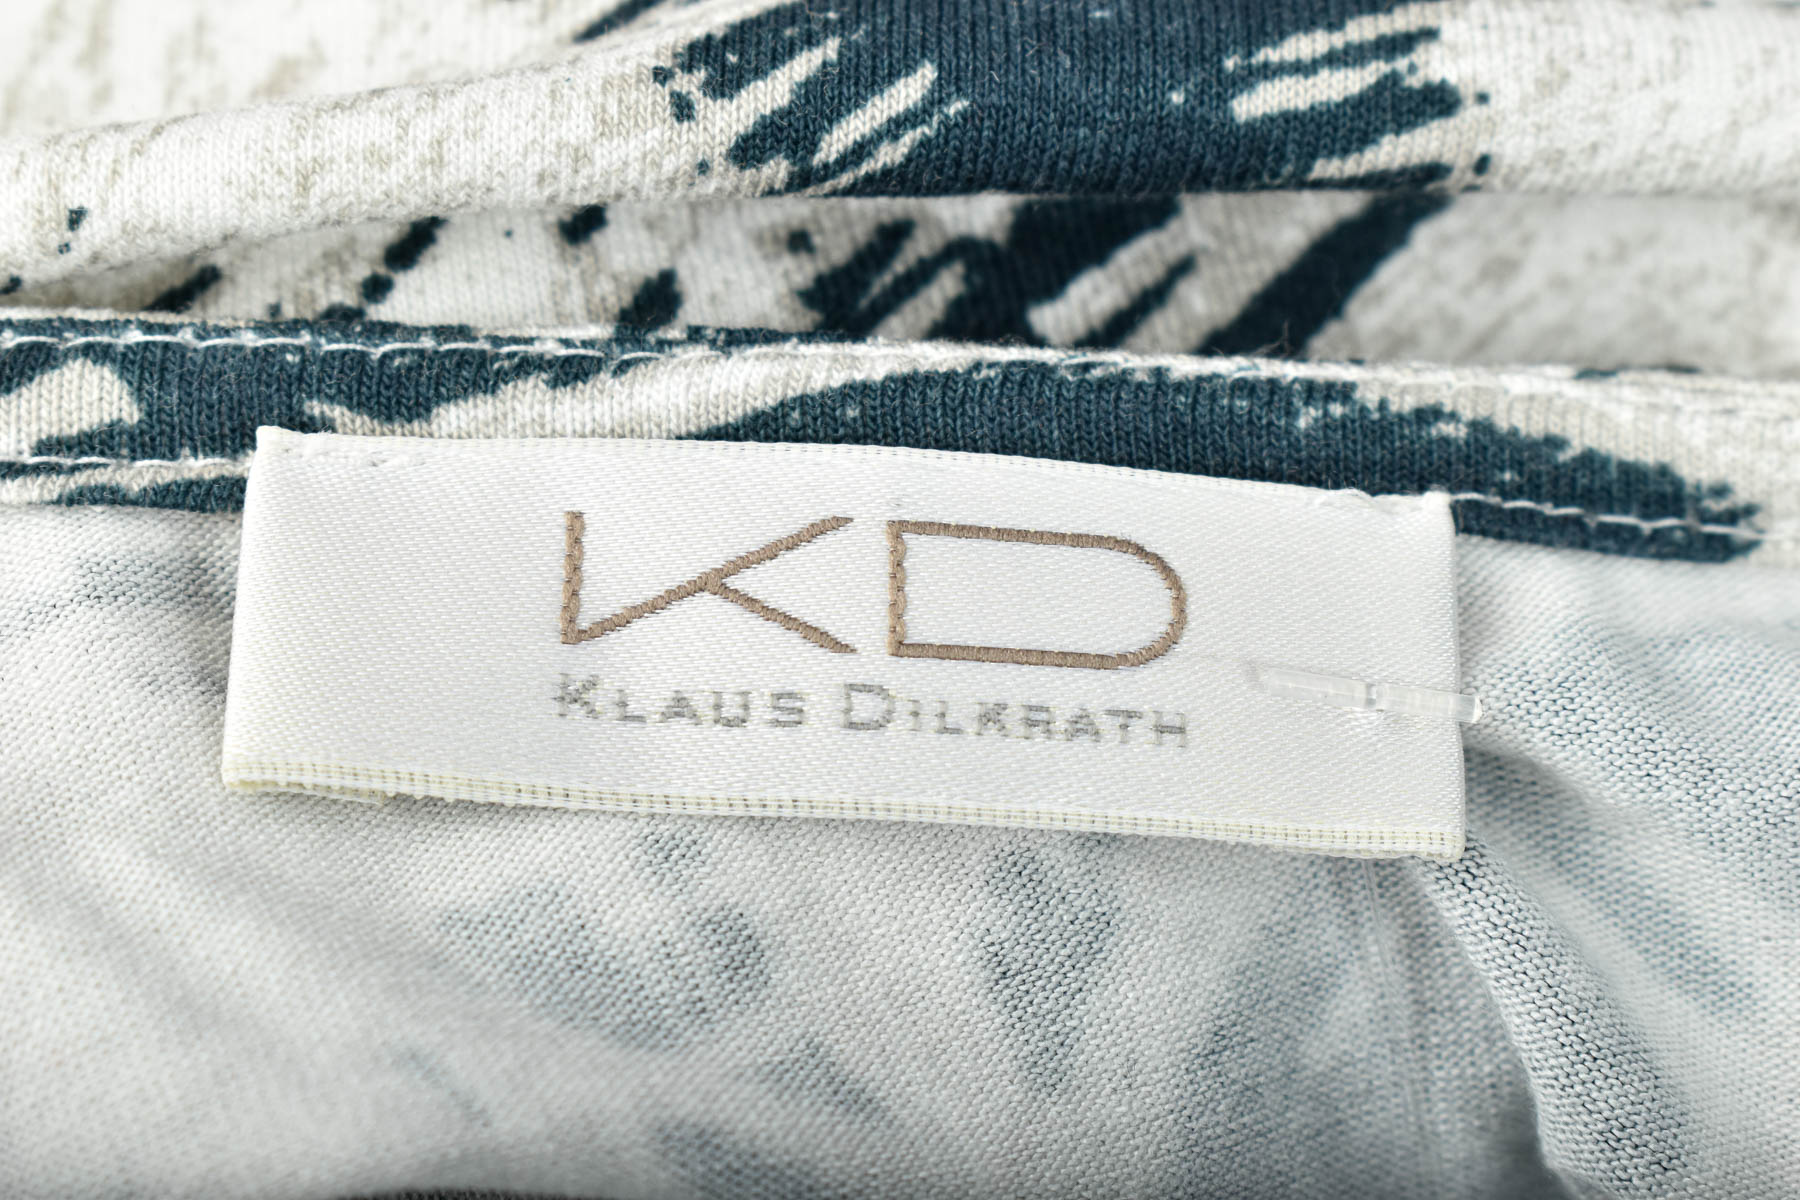 Dress - KD Klaus Dilkrath - 2